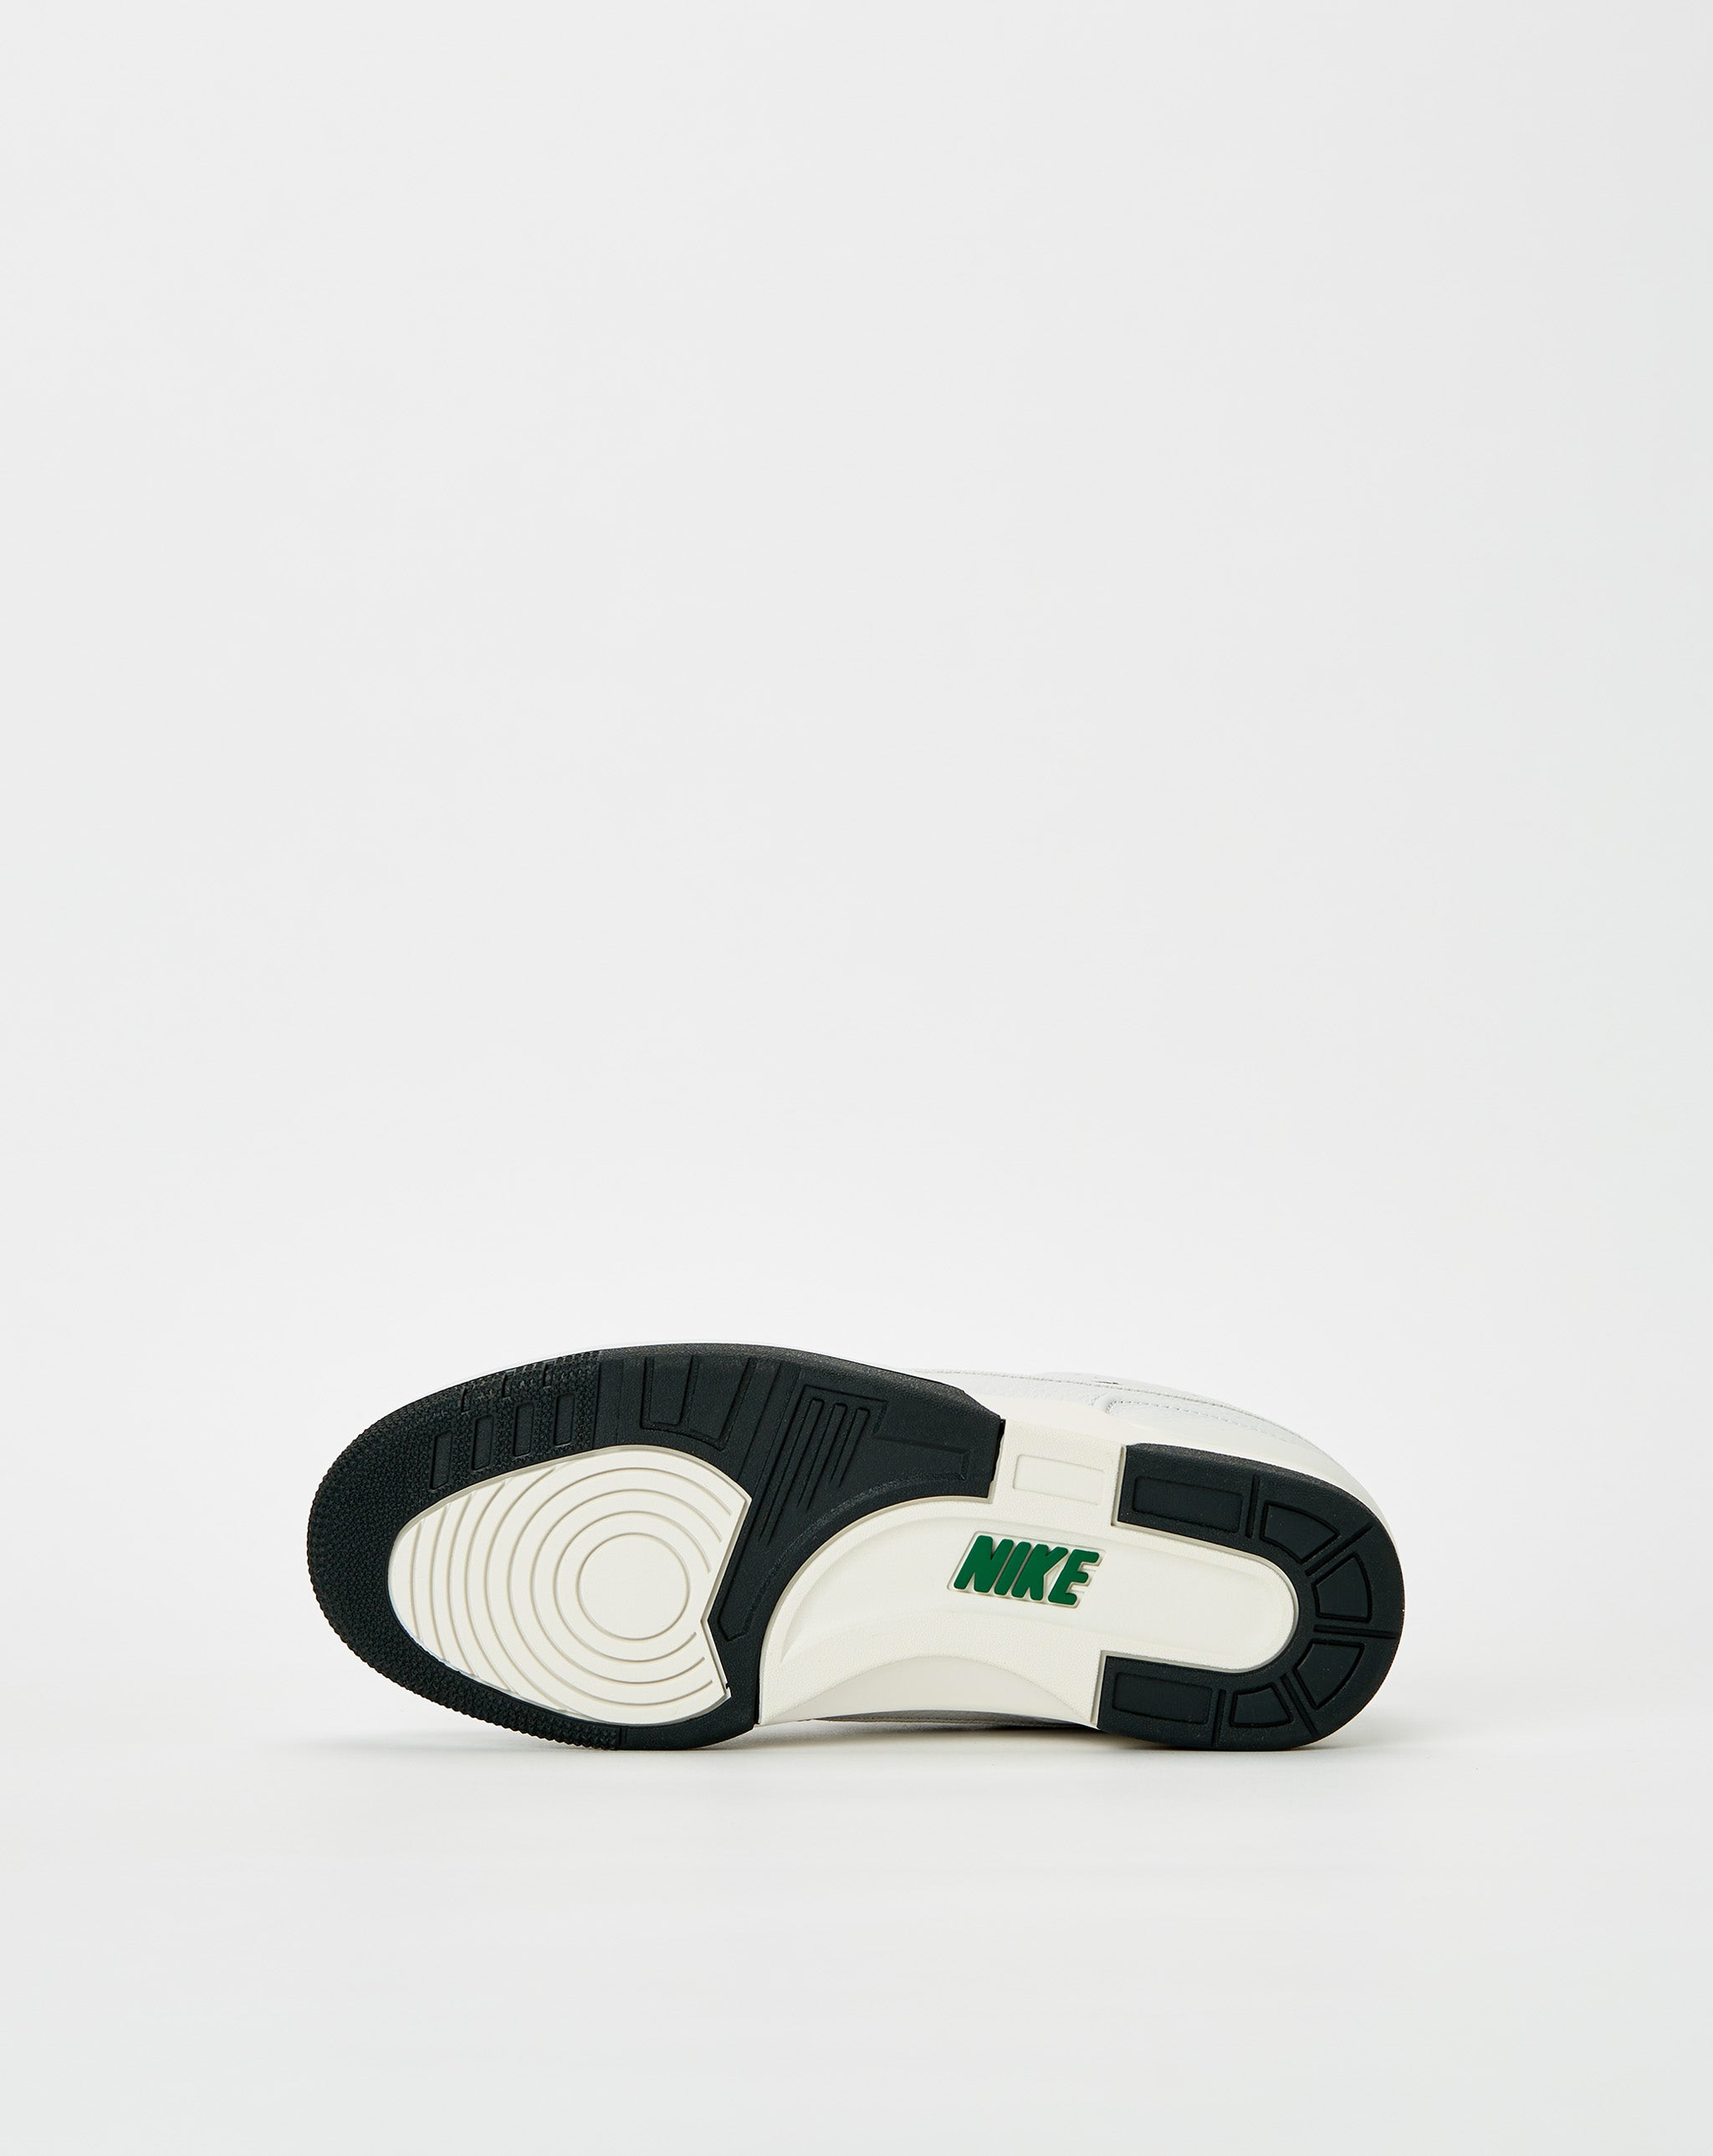 Nike nike shox suede gray color palette black  - Cheap Erlebniswelt-fliegenfischen Jordan outlet